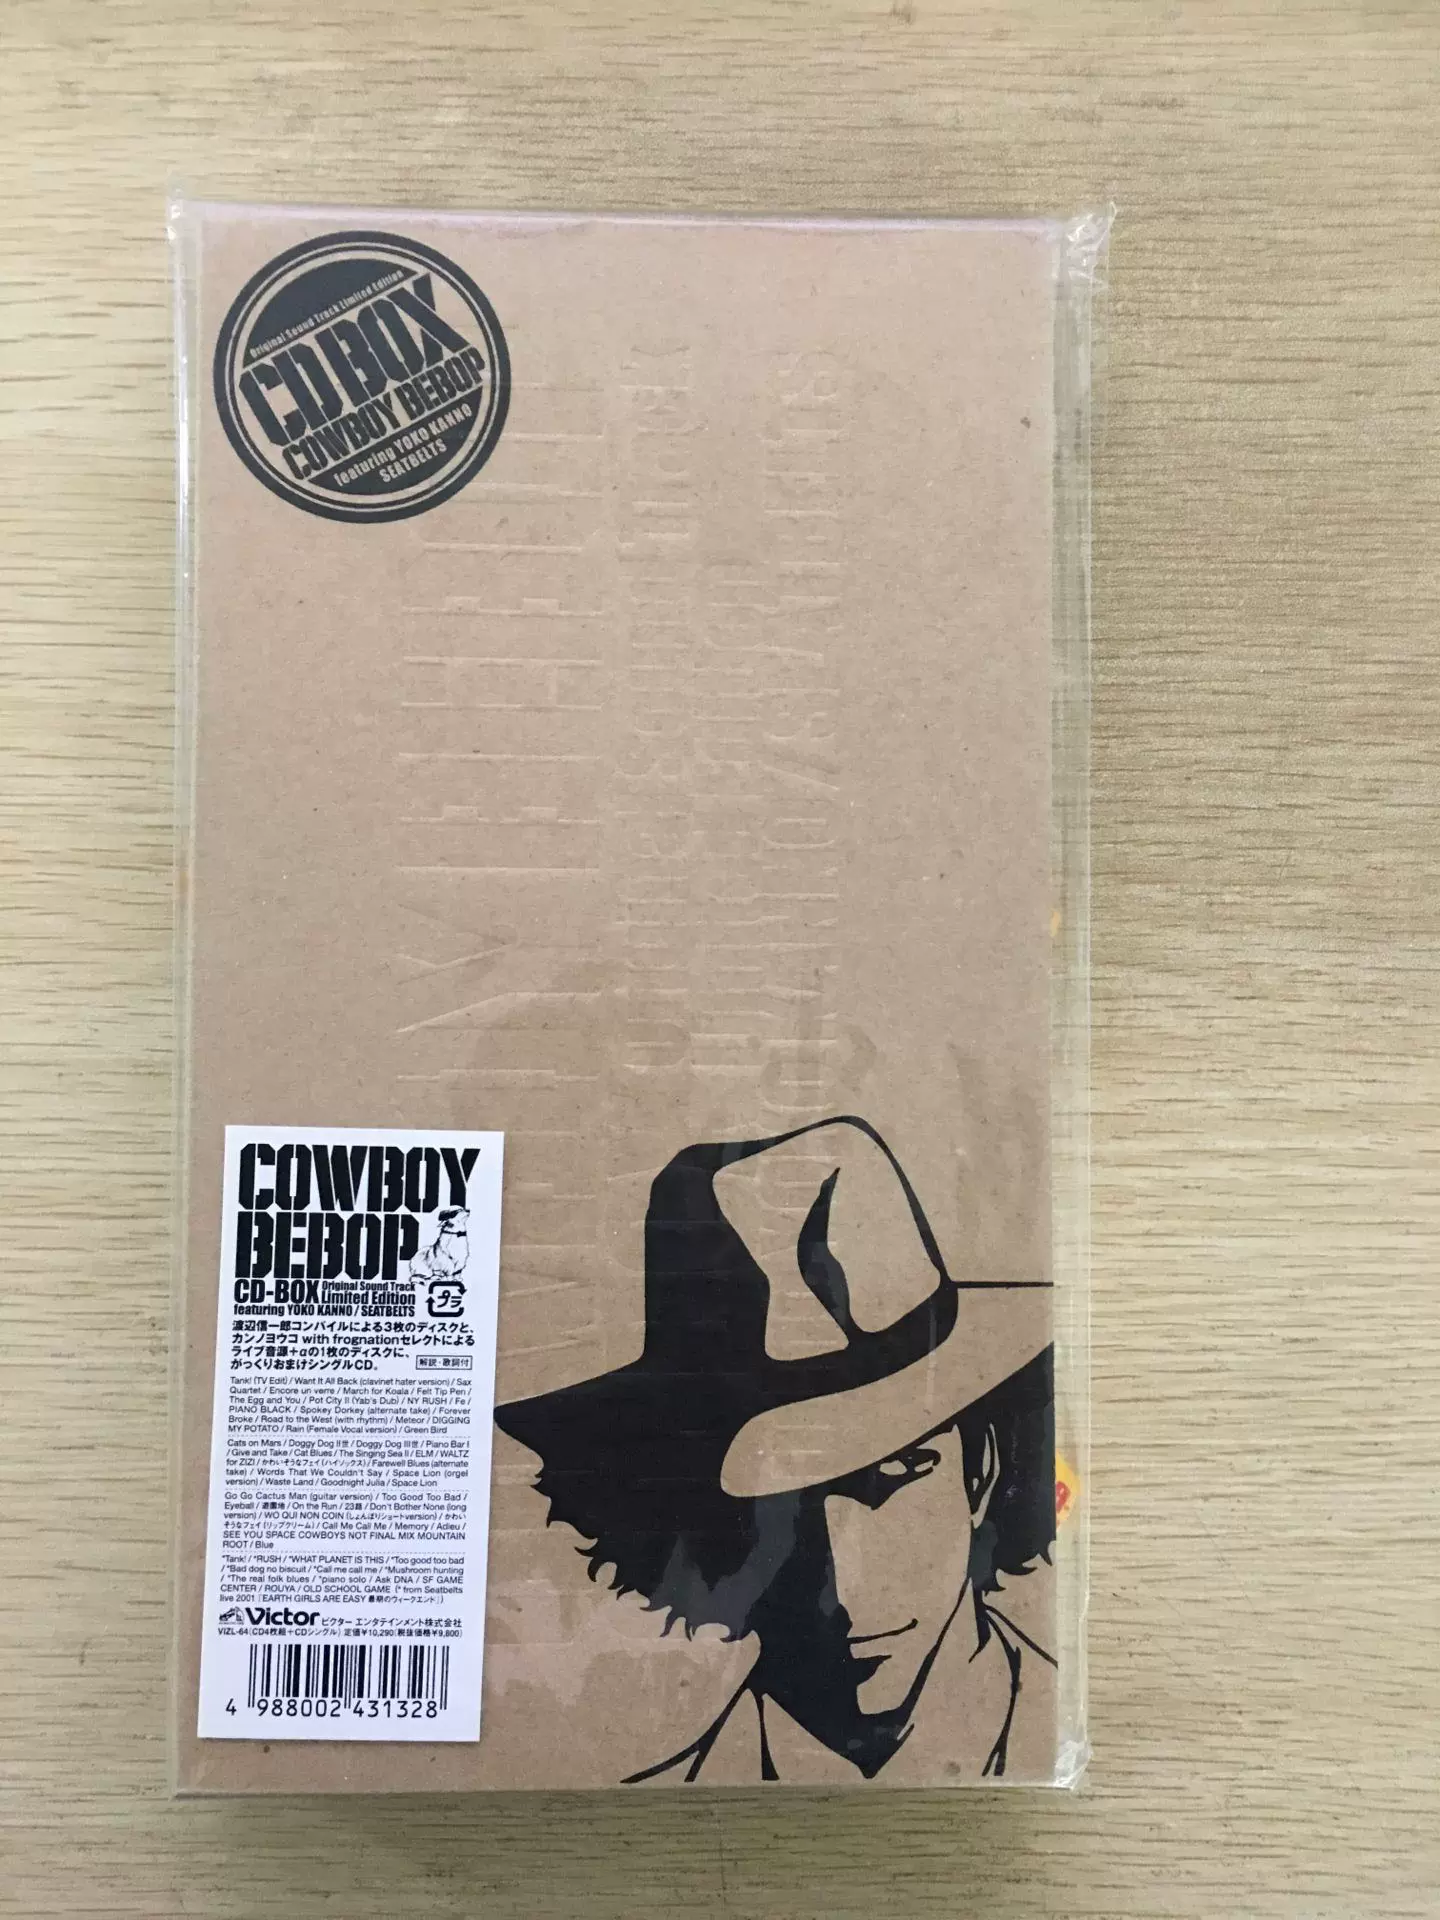 COWBOY BEBOP CD-BOX Original Sound Track (CD) 菅野よう子 - アニメ 